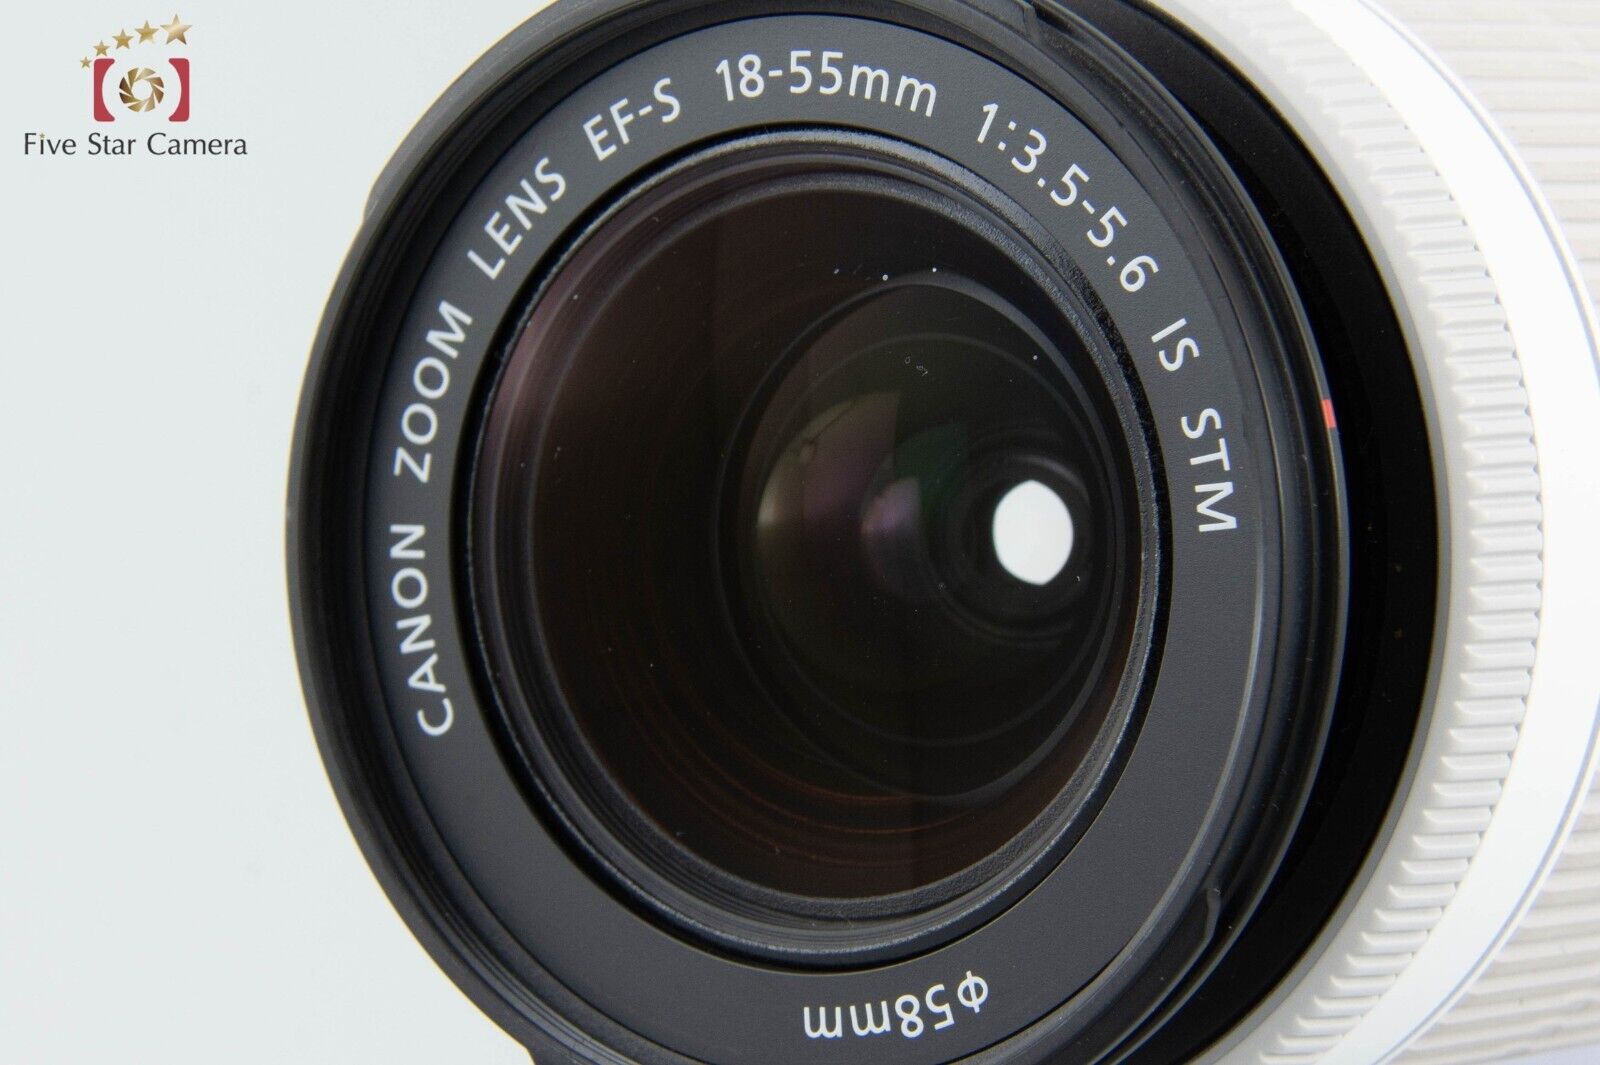 "Count 2,019" Canon EOS Kiss X7 / Rebel SL1 / 100D White 18.0 MP 18-55 40 Lenses